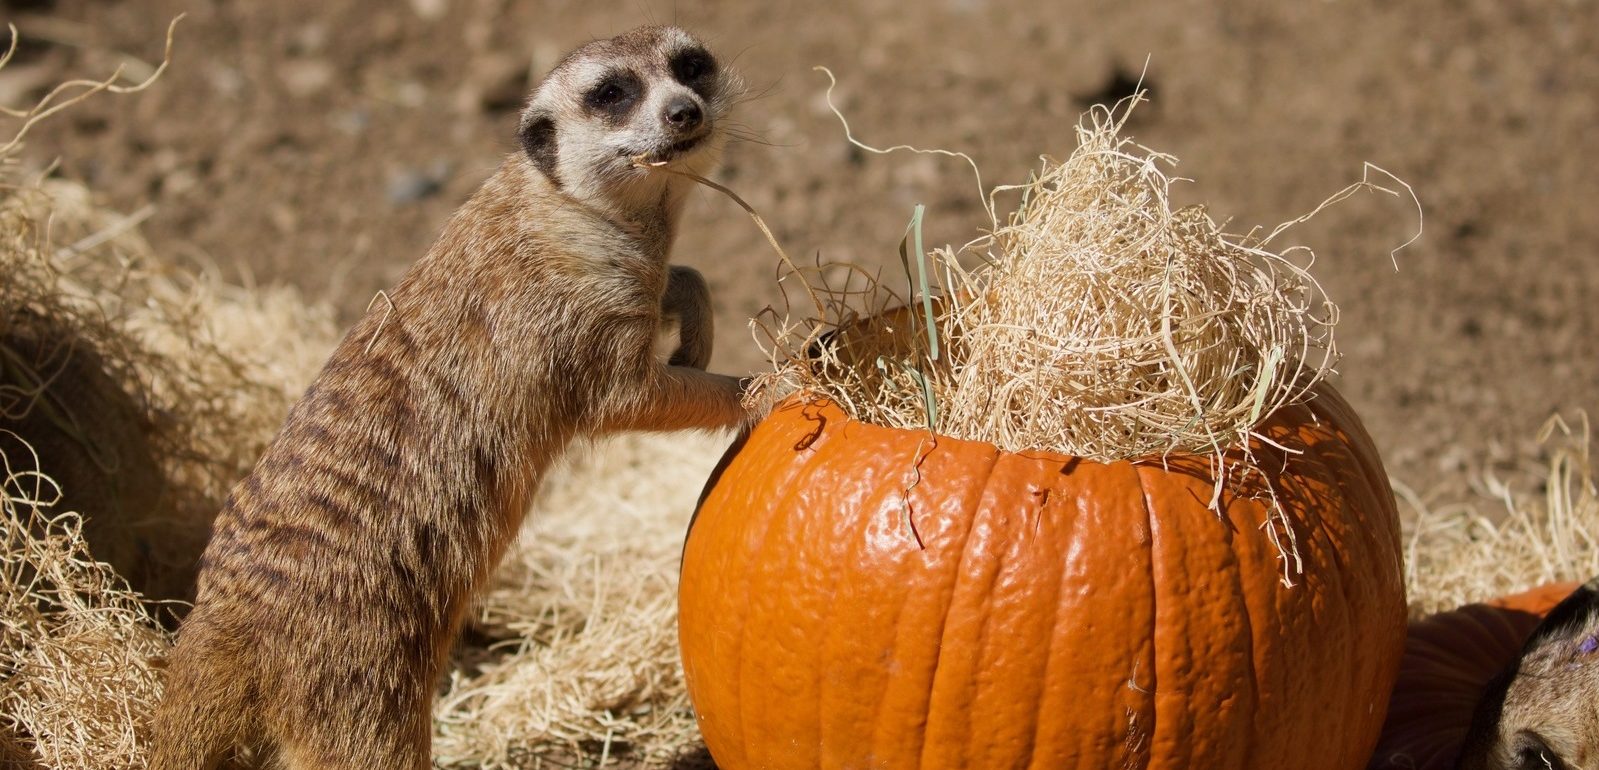 meerkat standing next to pumpkin filled with straw